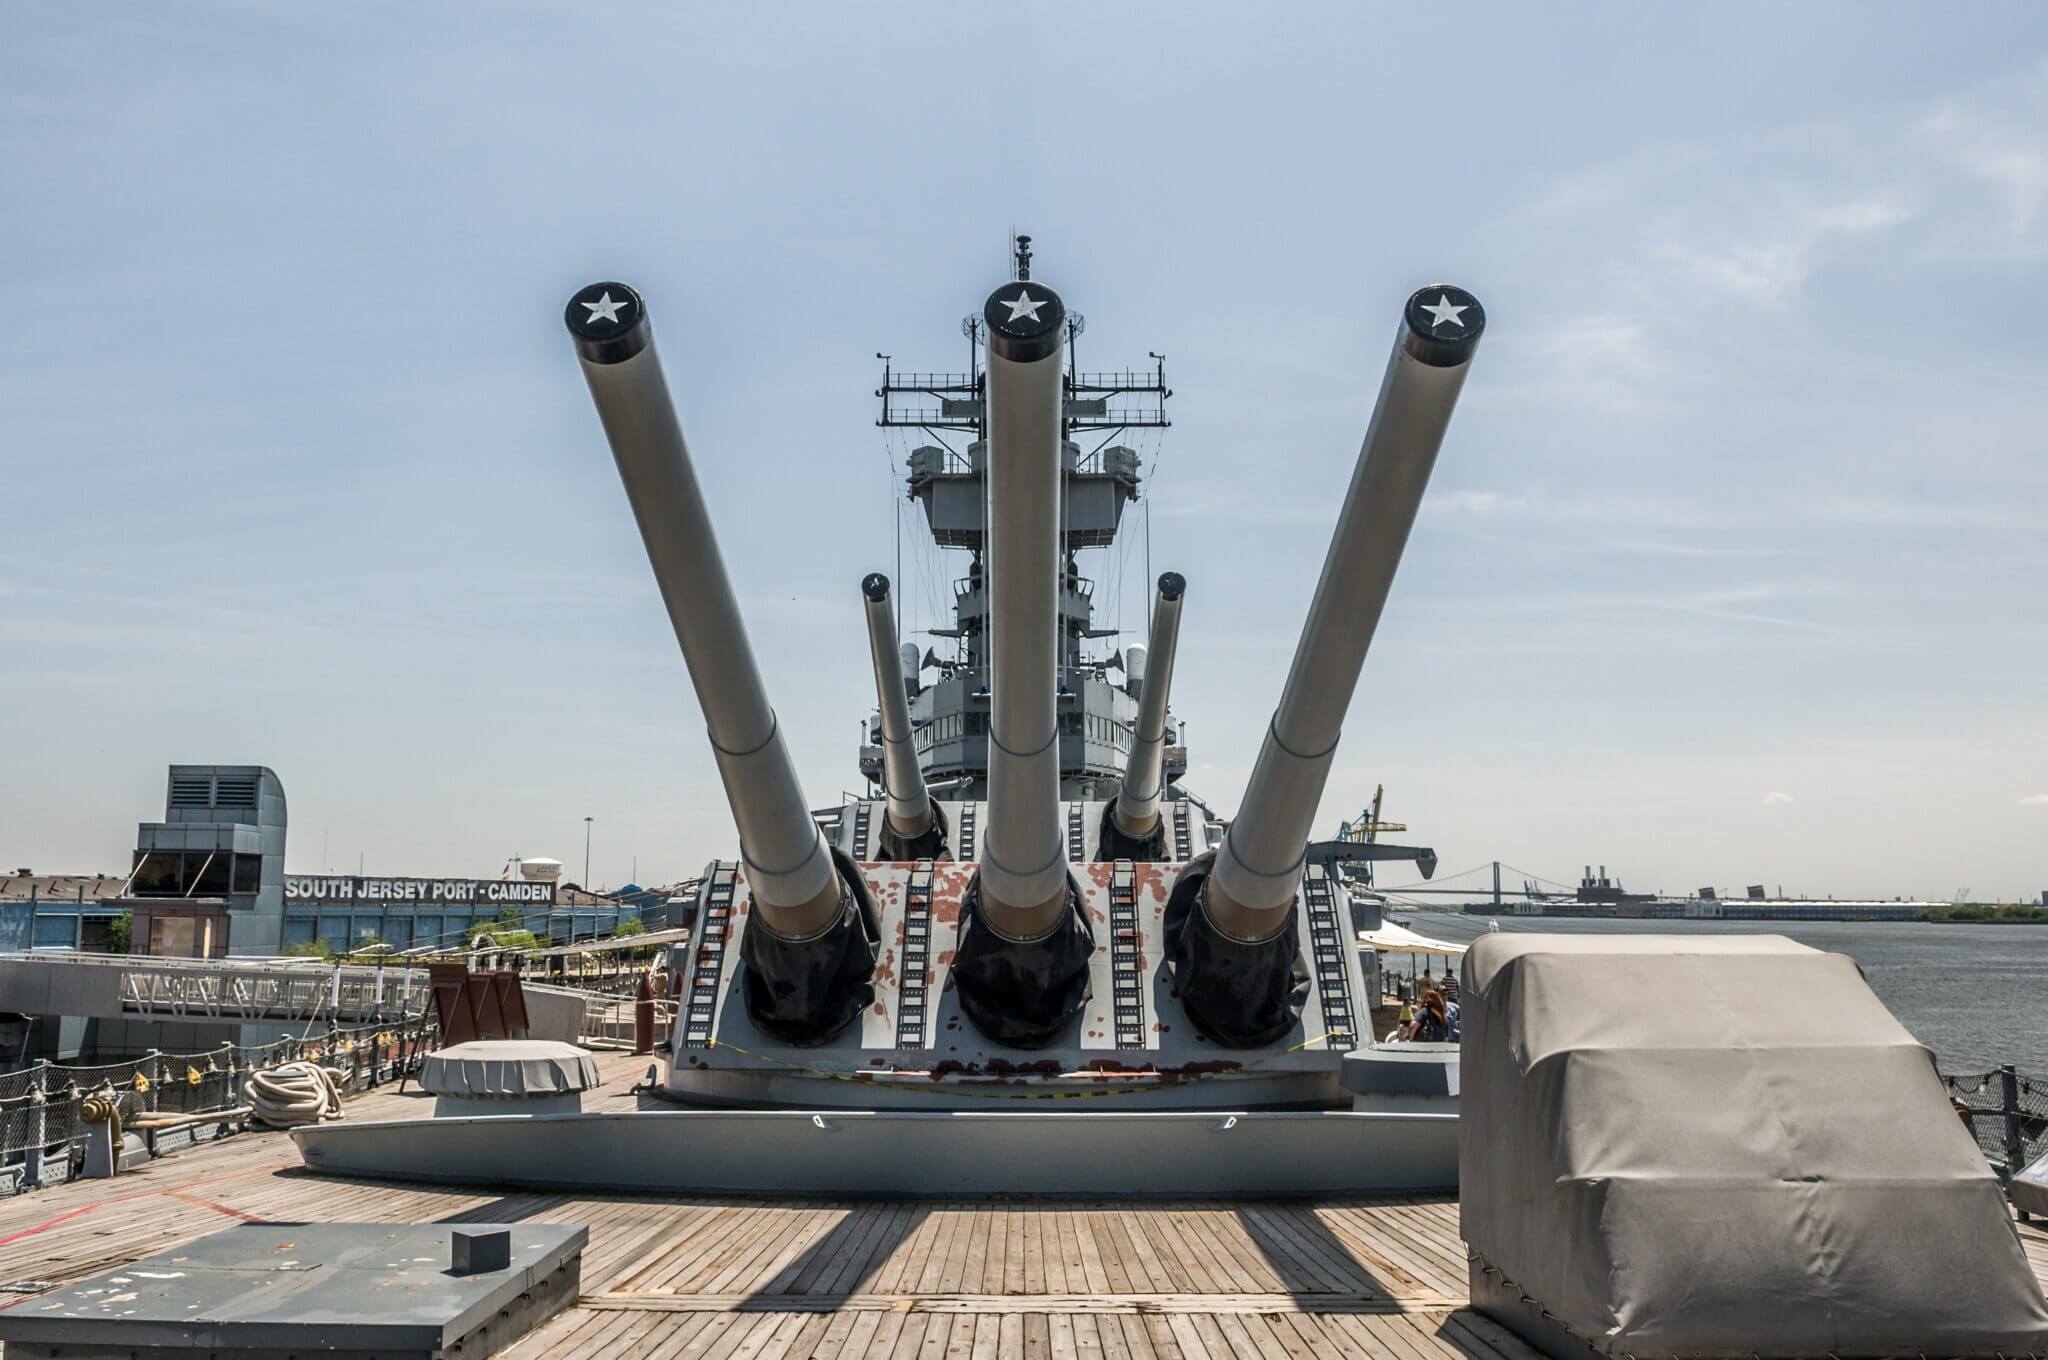 Battleship New Jersey at Camden, NJ